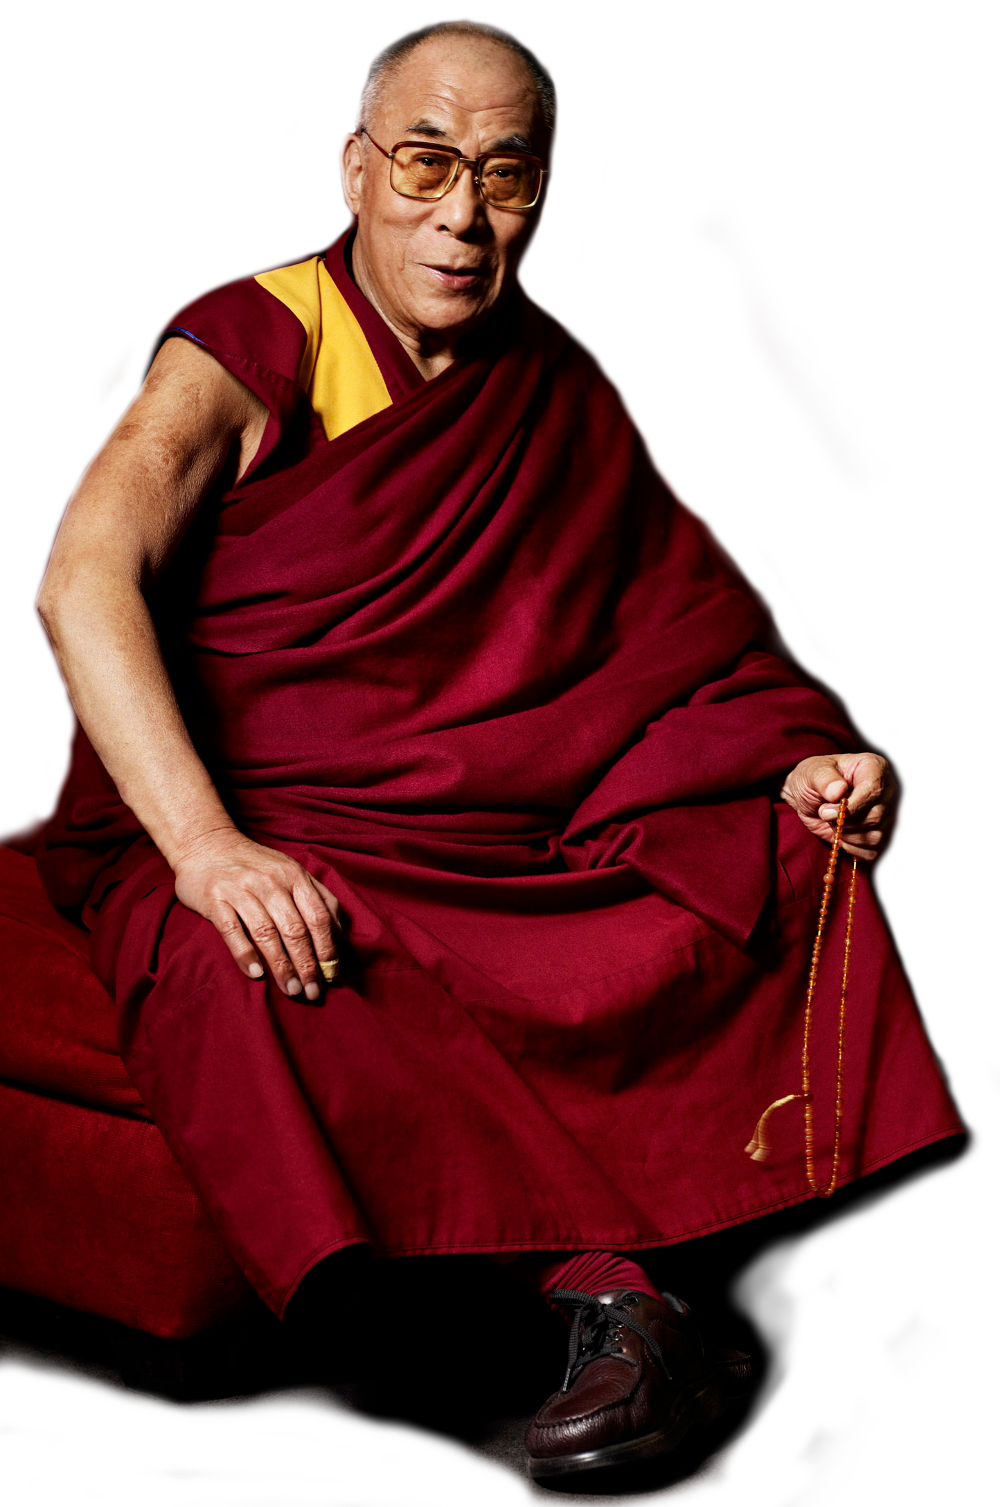 Dalai Lama PNG Image Background